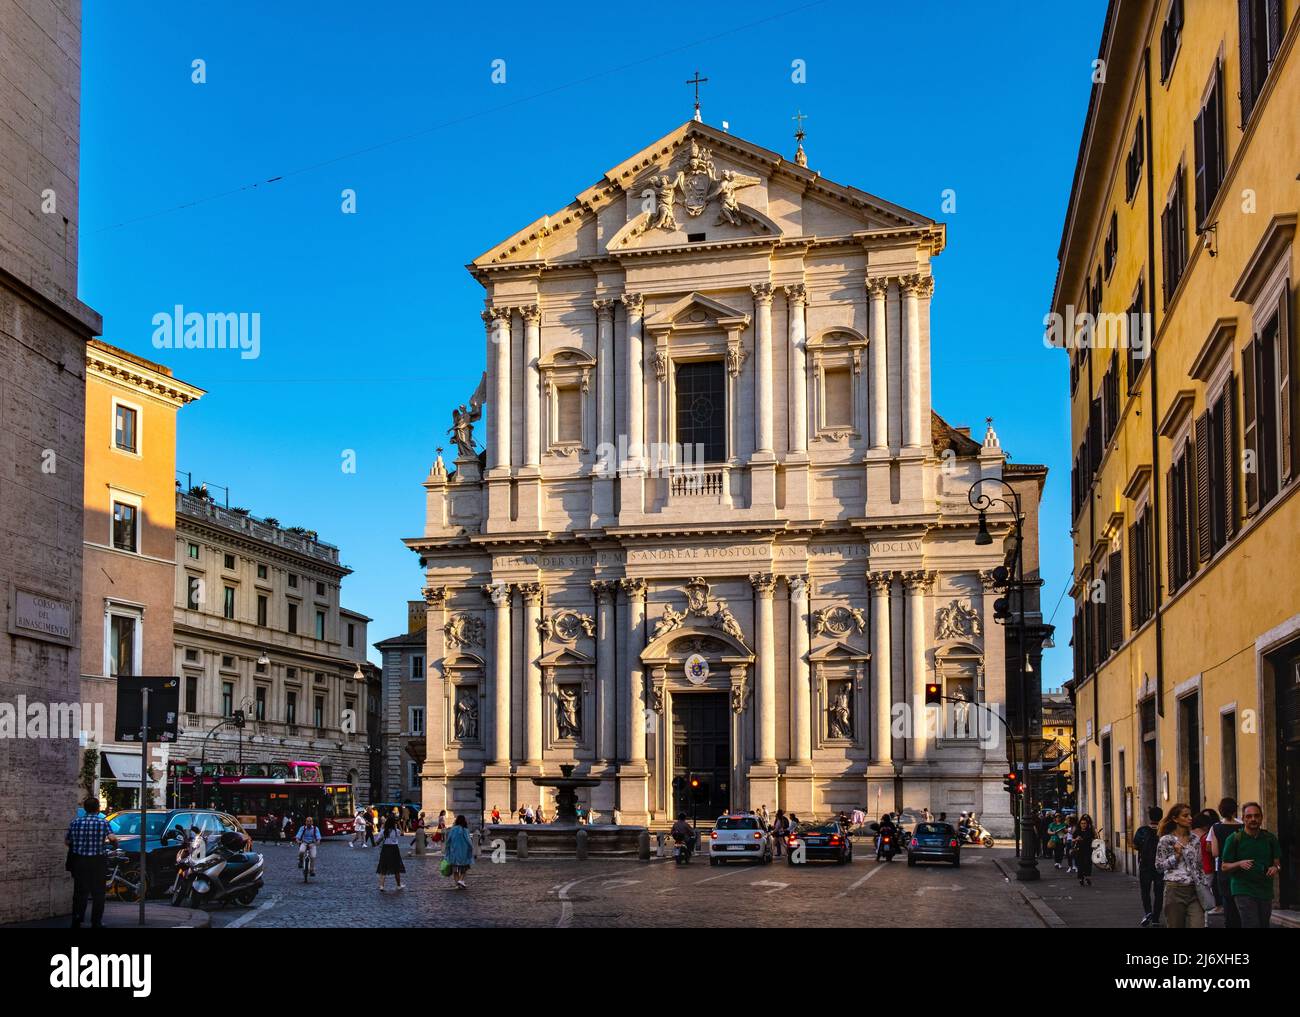 Rome, Italy - May 25, 2018: Sant'Andrea della Valle basilica of Theatines order at Corso Vittorio Emanuele street in historic city center of Rome Stock Photo